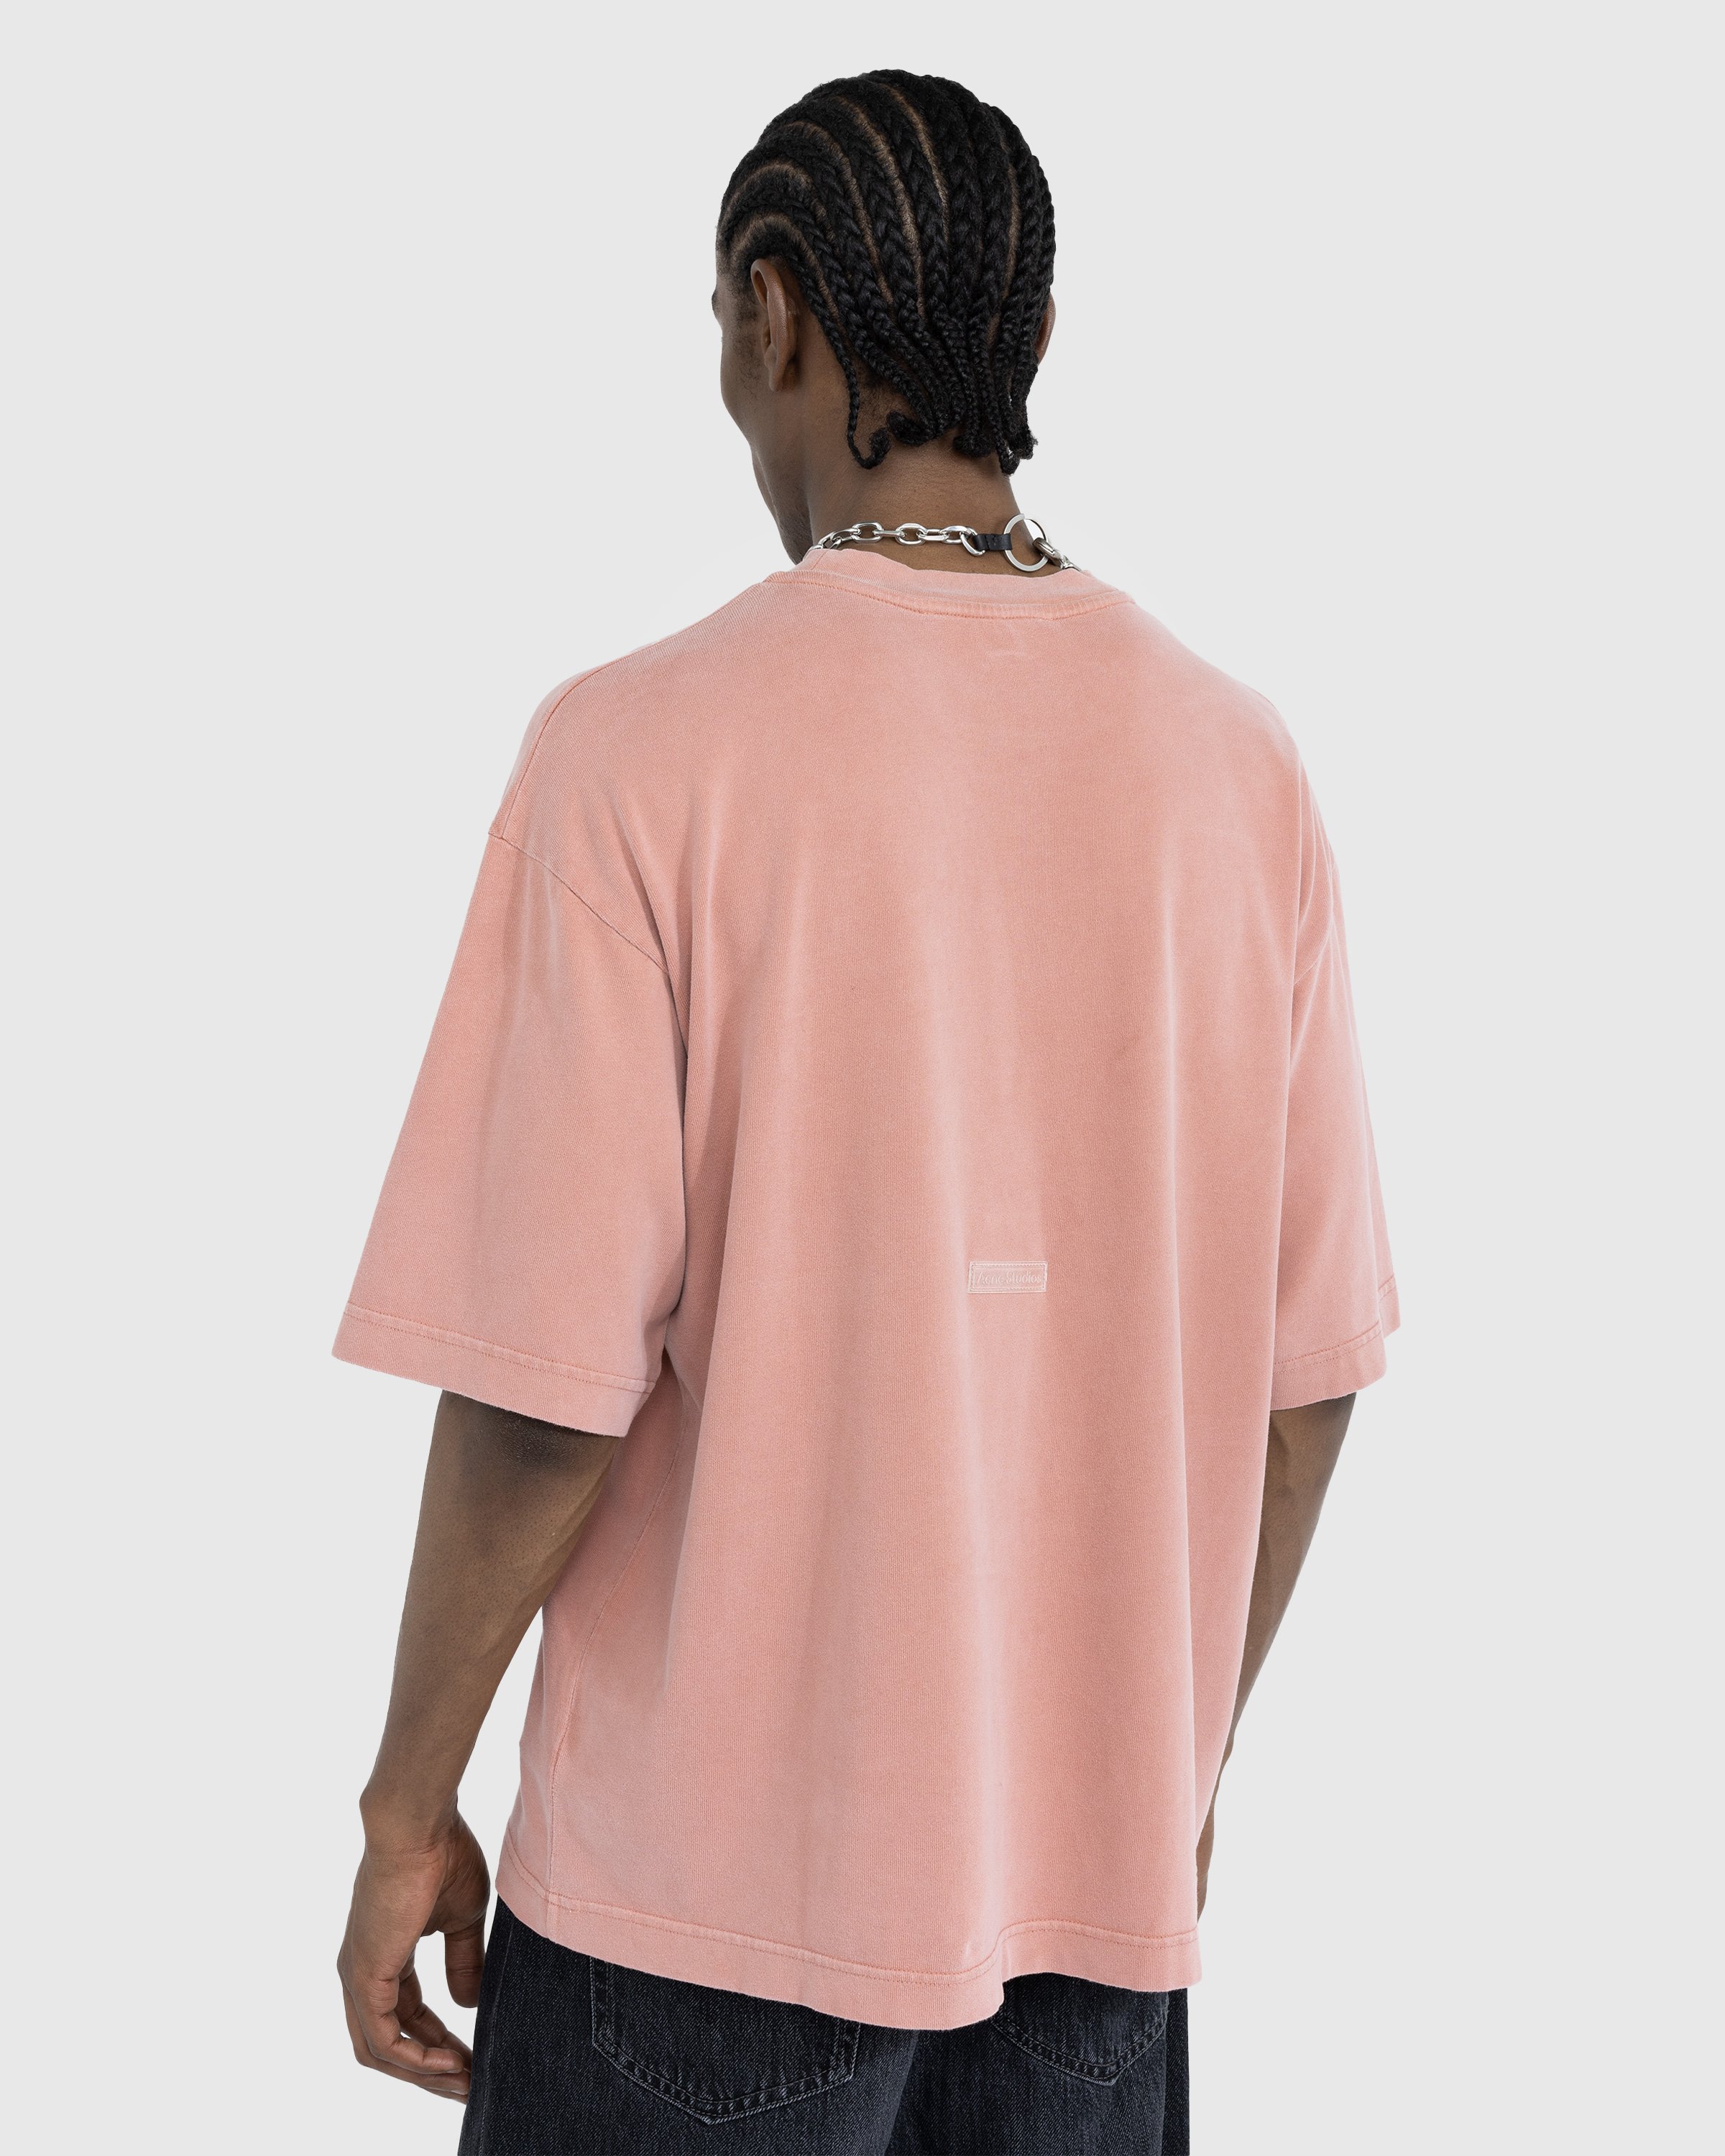 Acne Studios - Garment-Dyed T-Shirt Vintage Pink - Clothing - Pink - Image 3